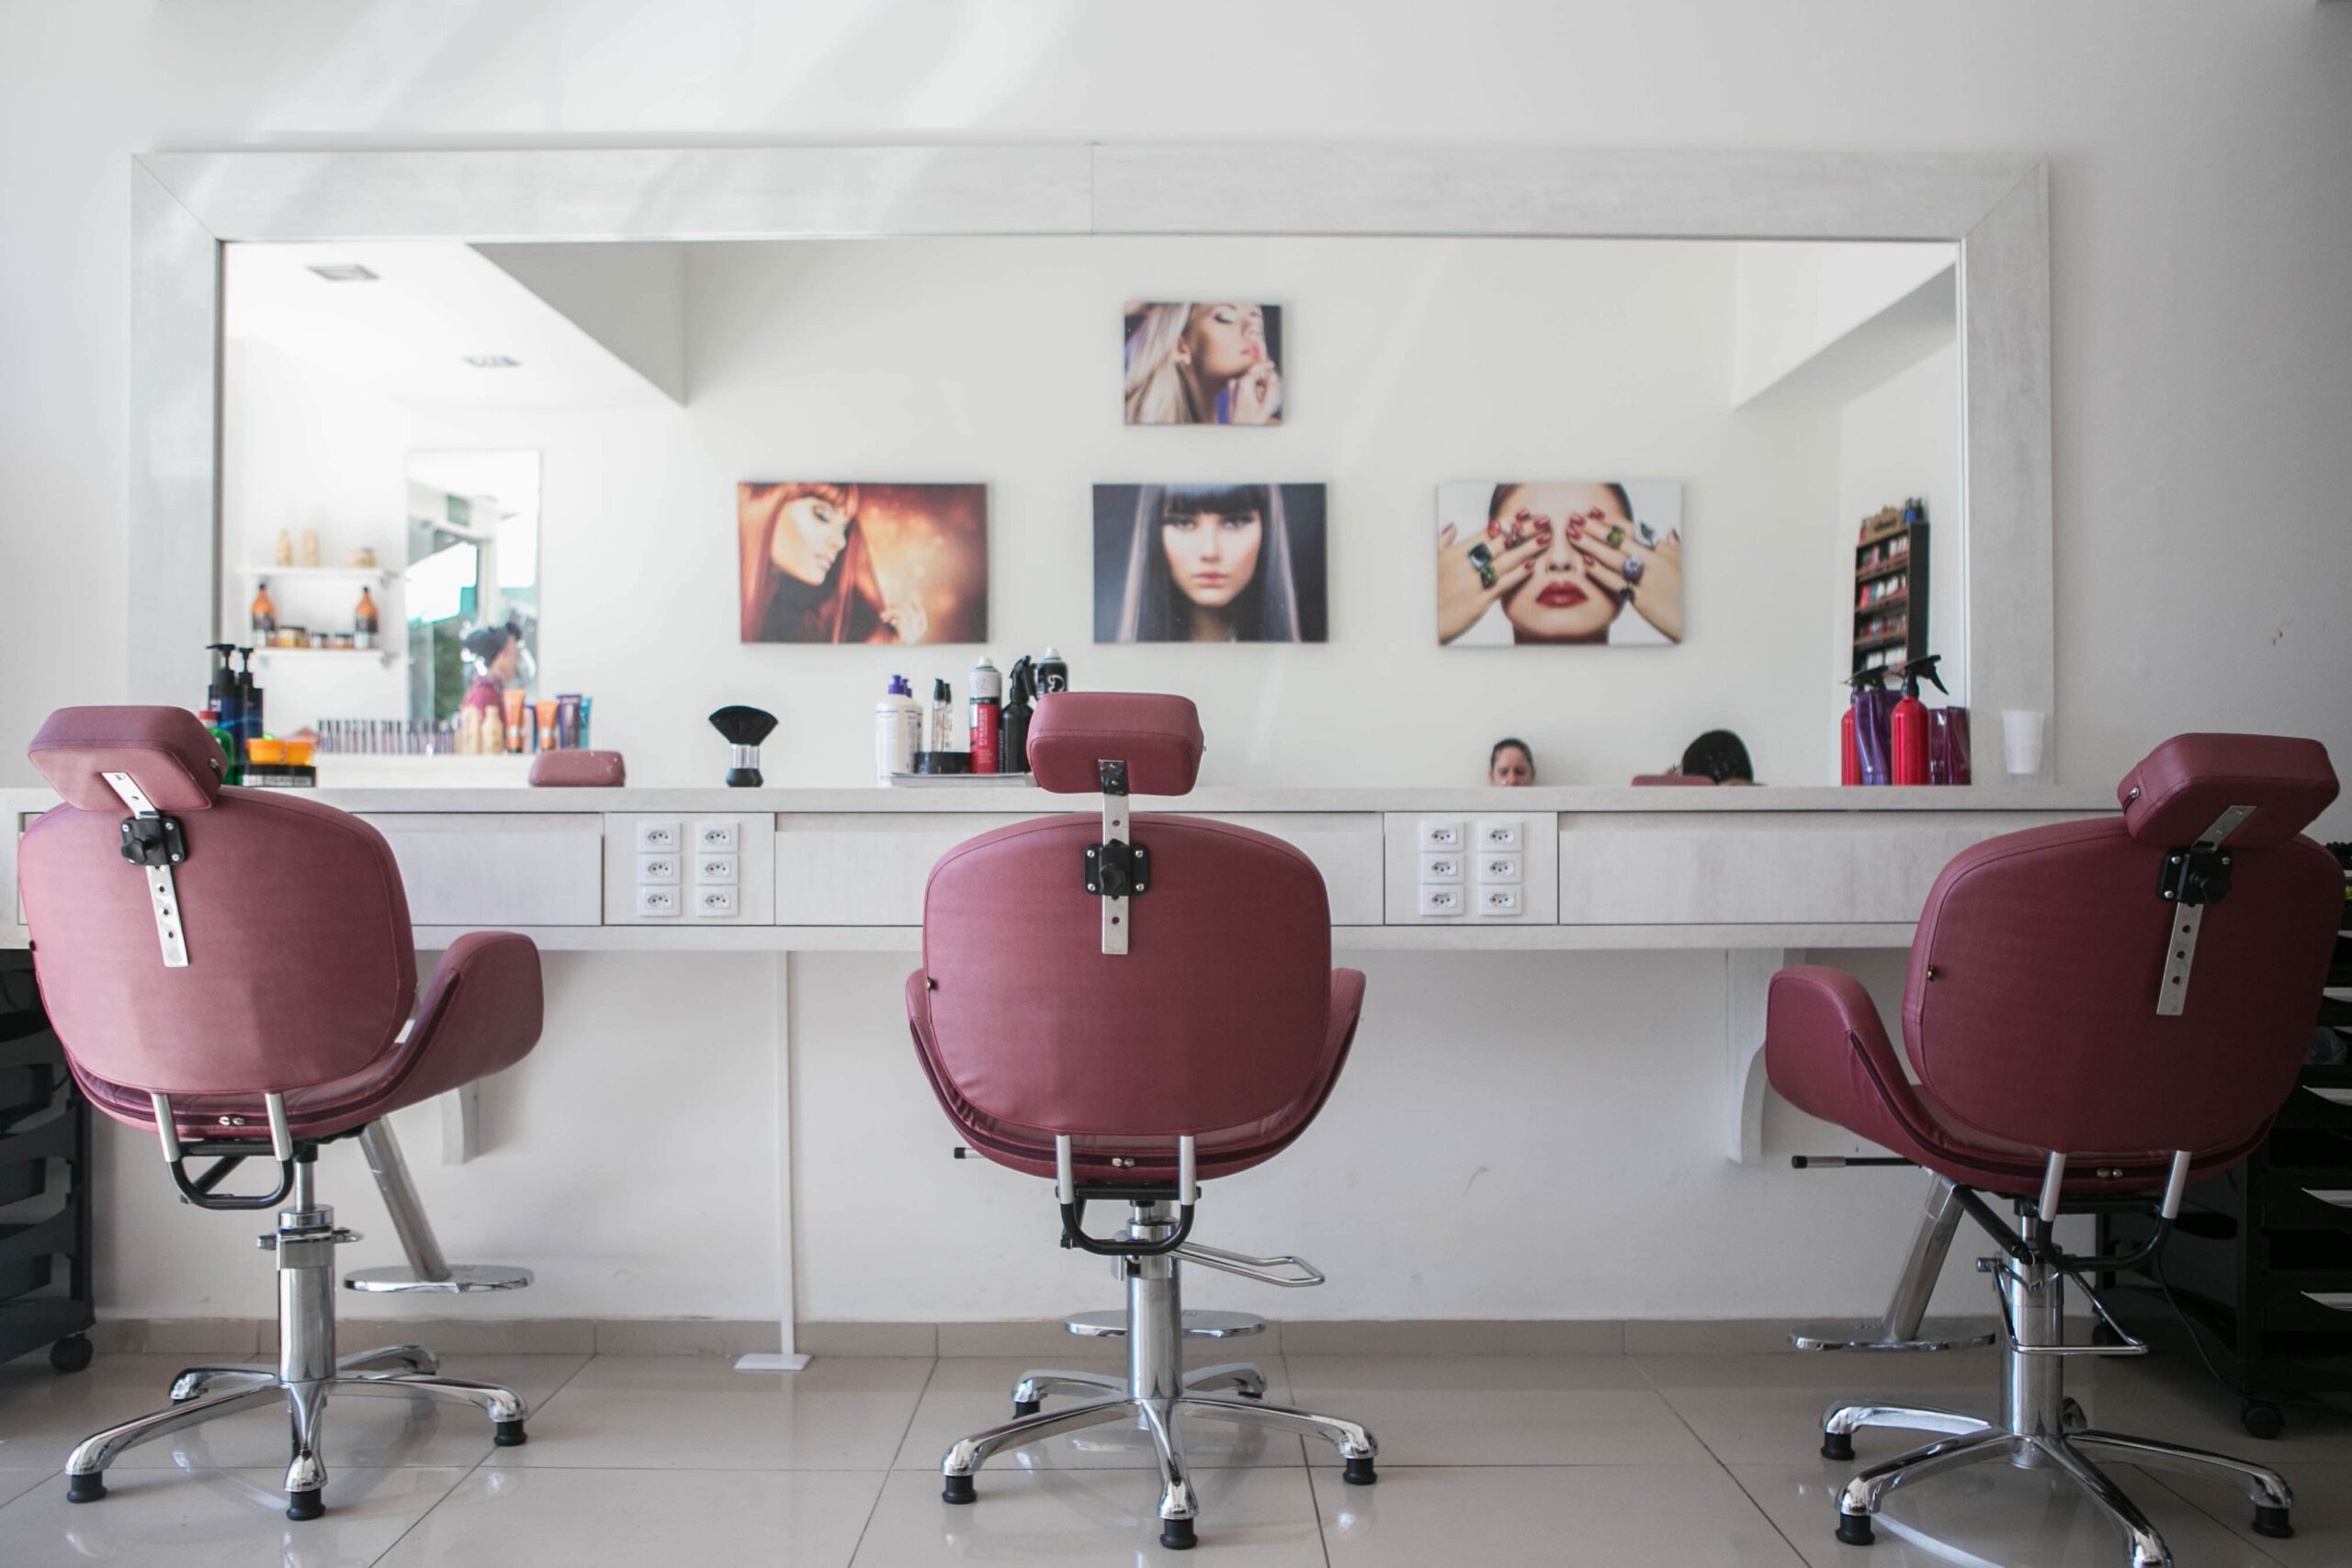 Un salon de coiffure avec 3 postes de coiffure